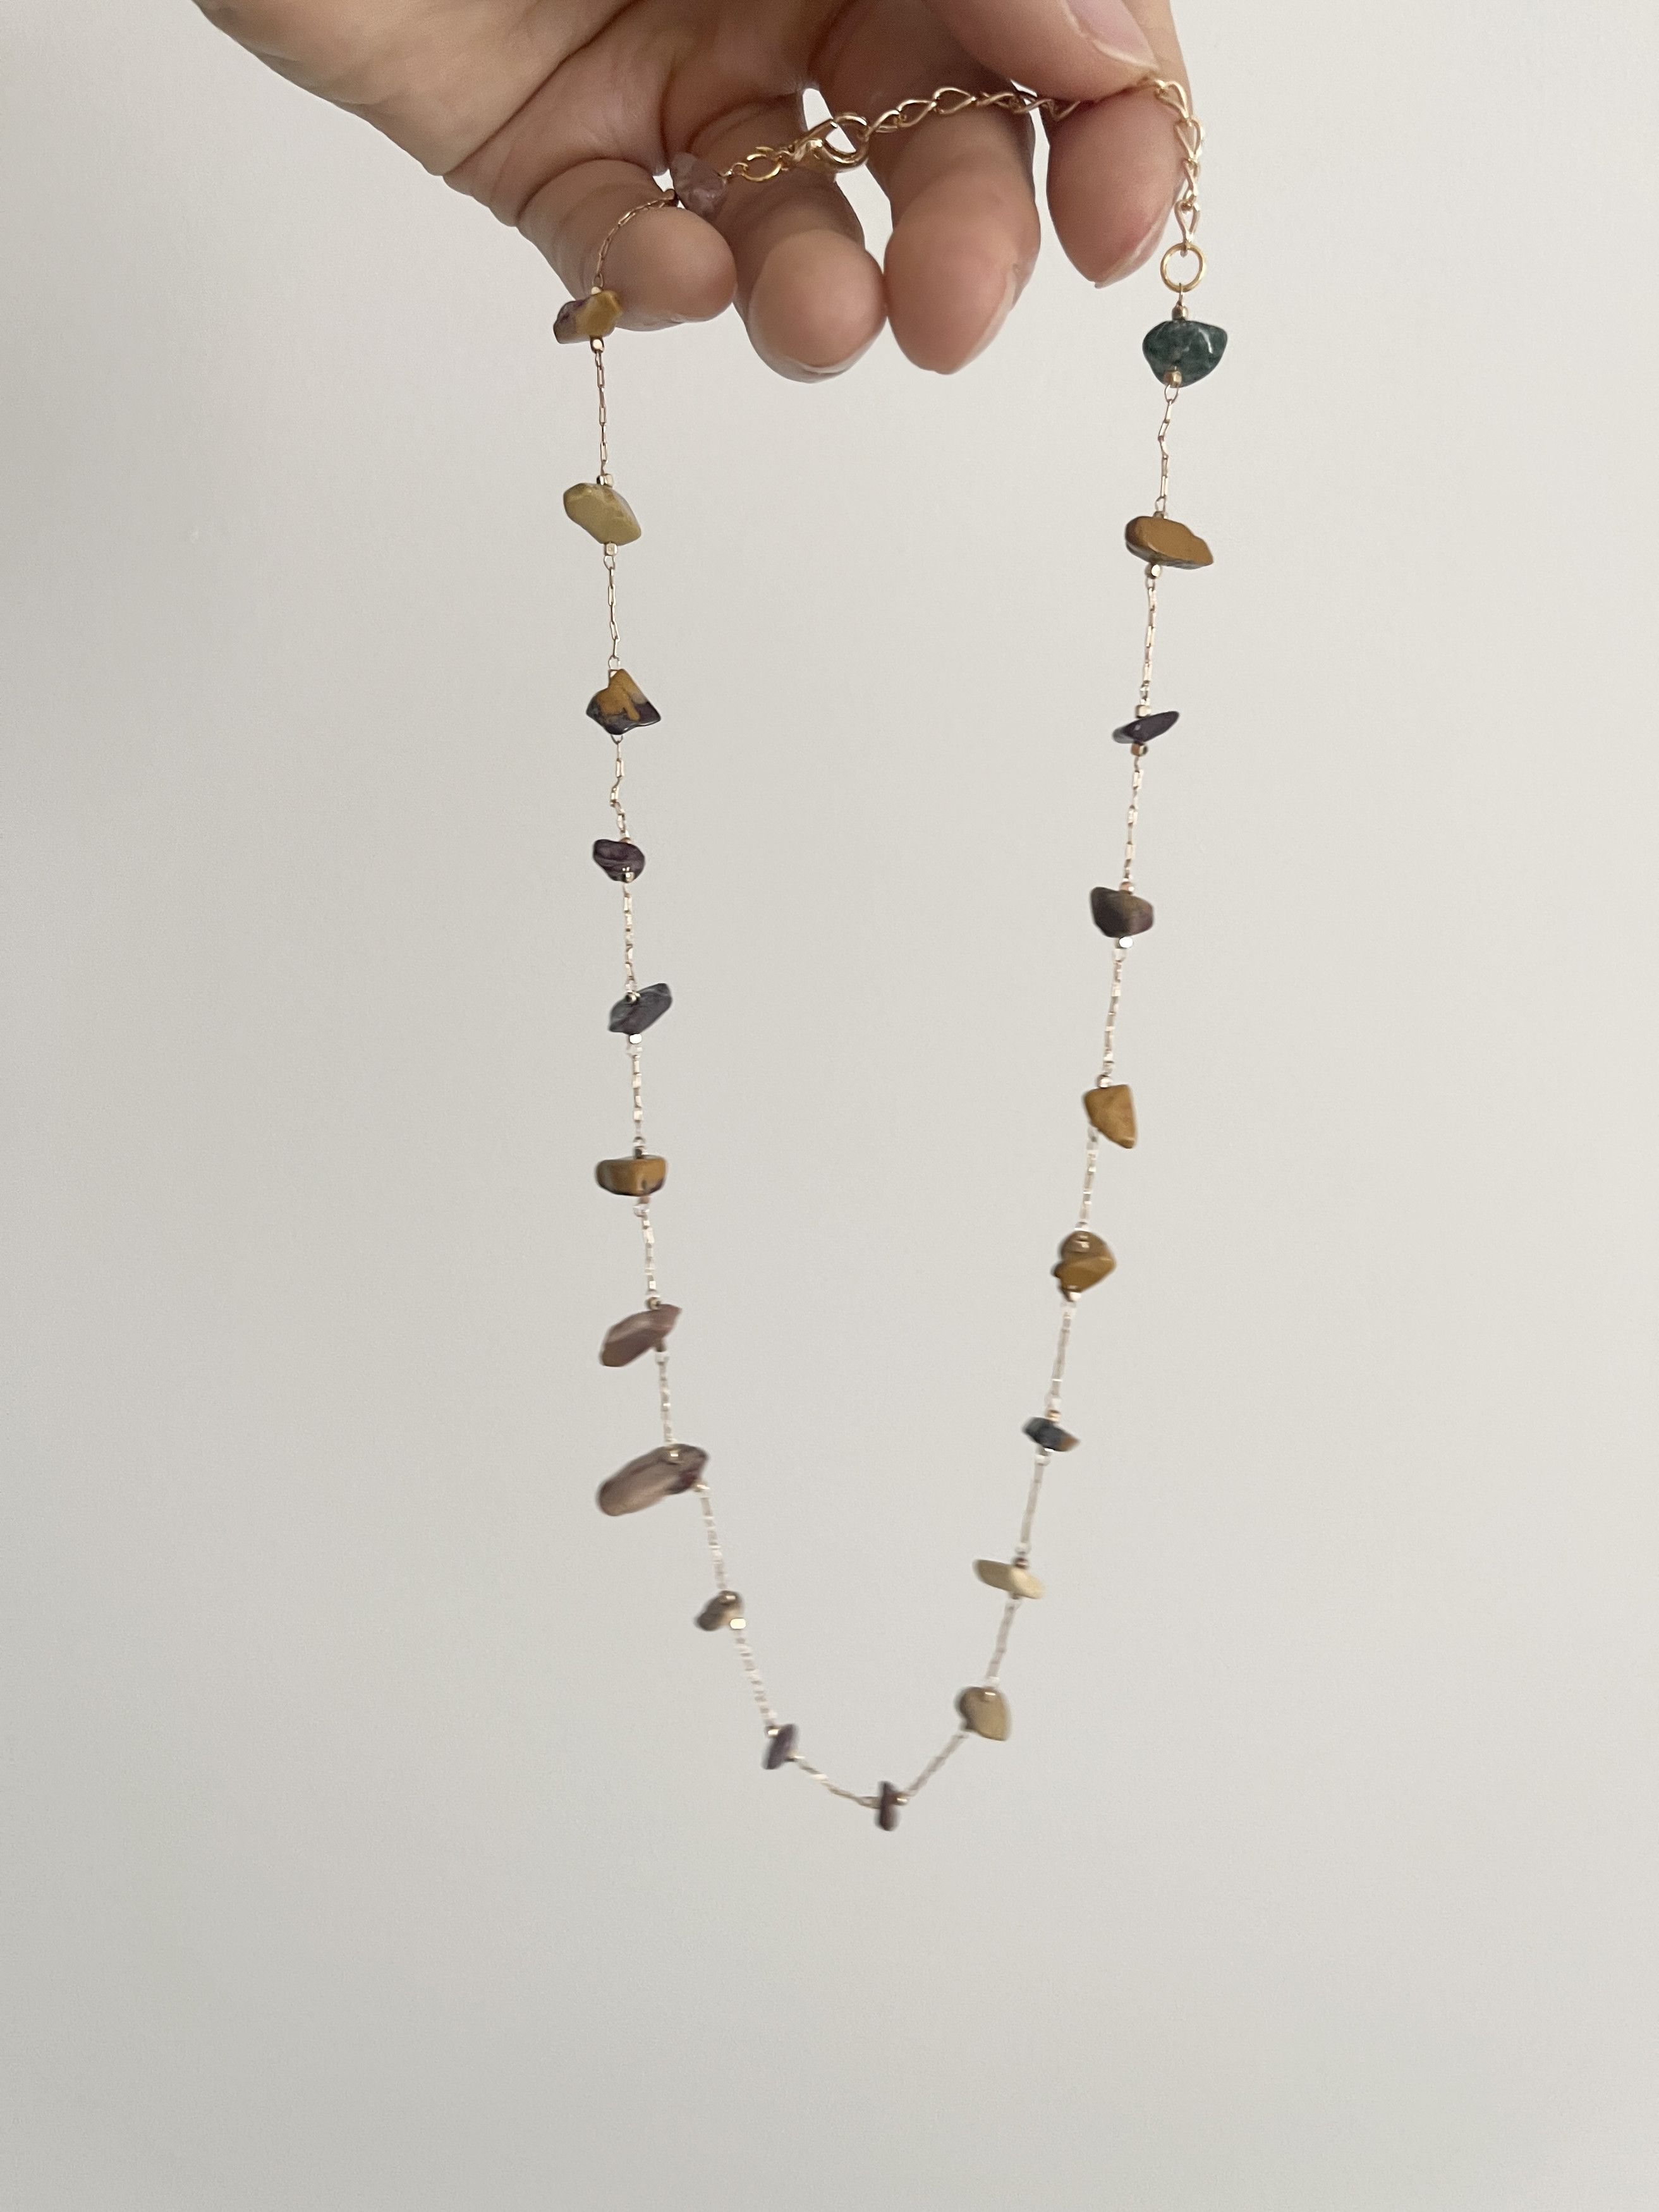 Vintage - STEAL! 2000s Japan Embroidered Stones Necklace - 1